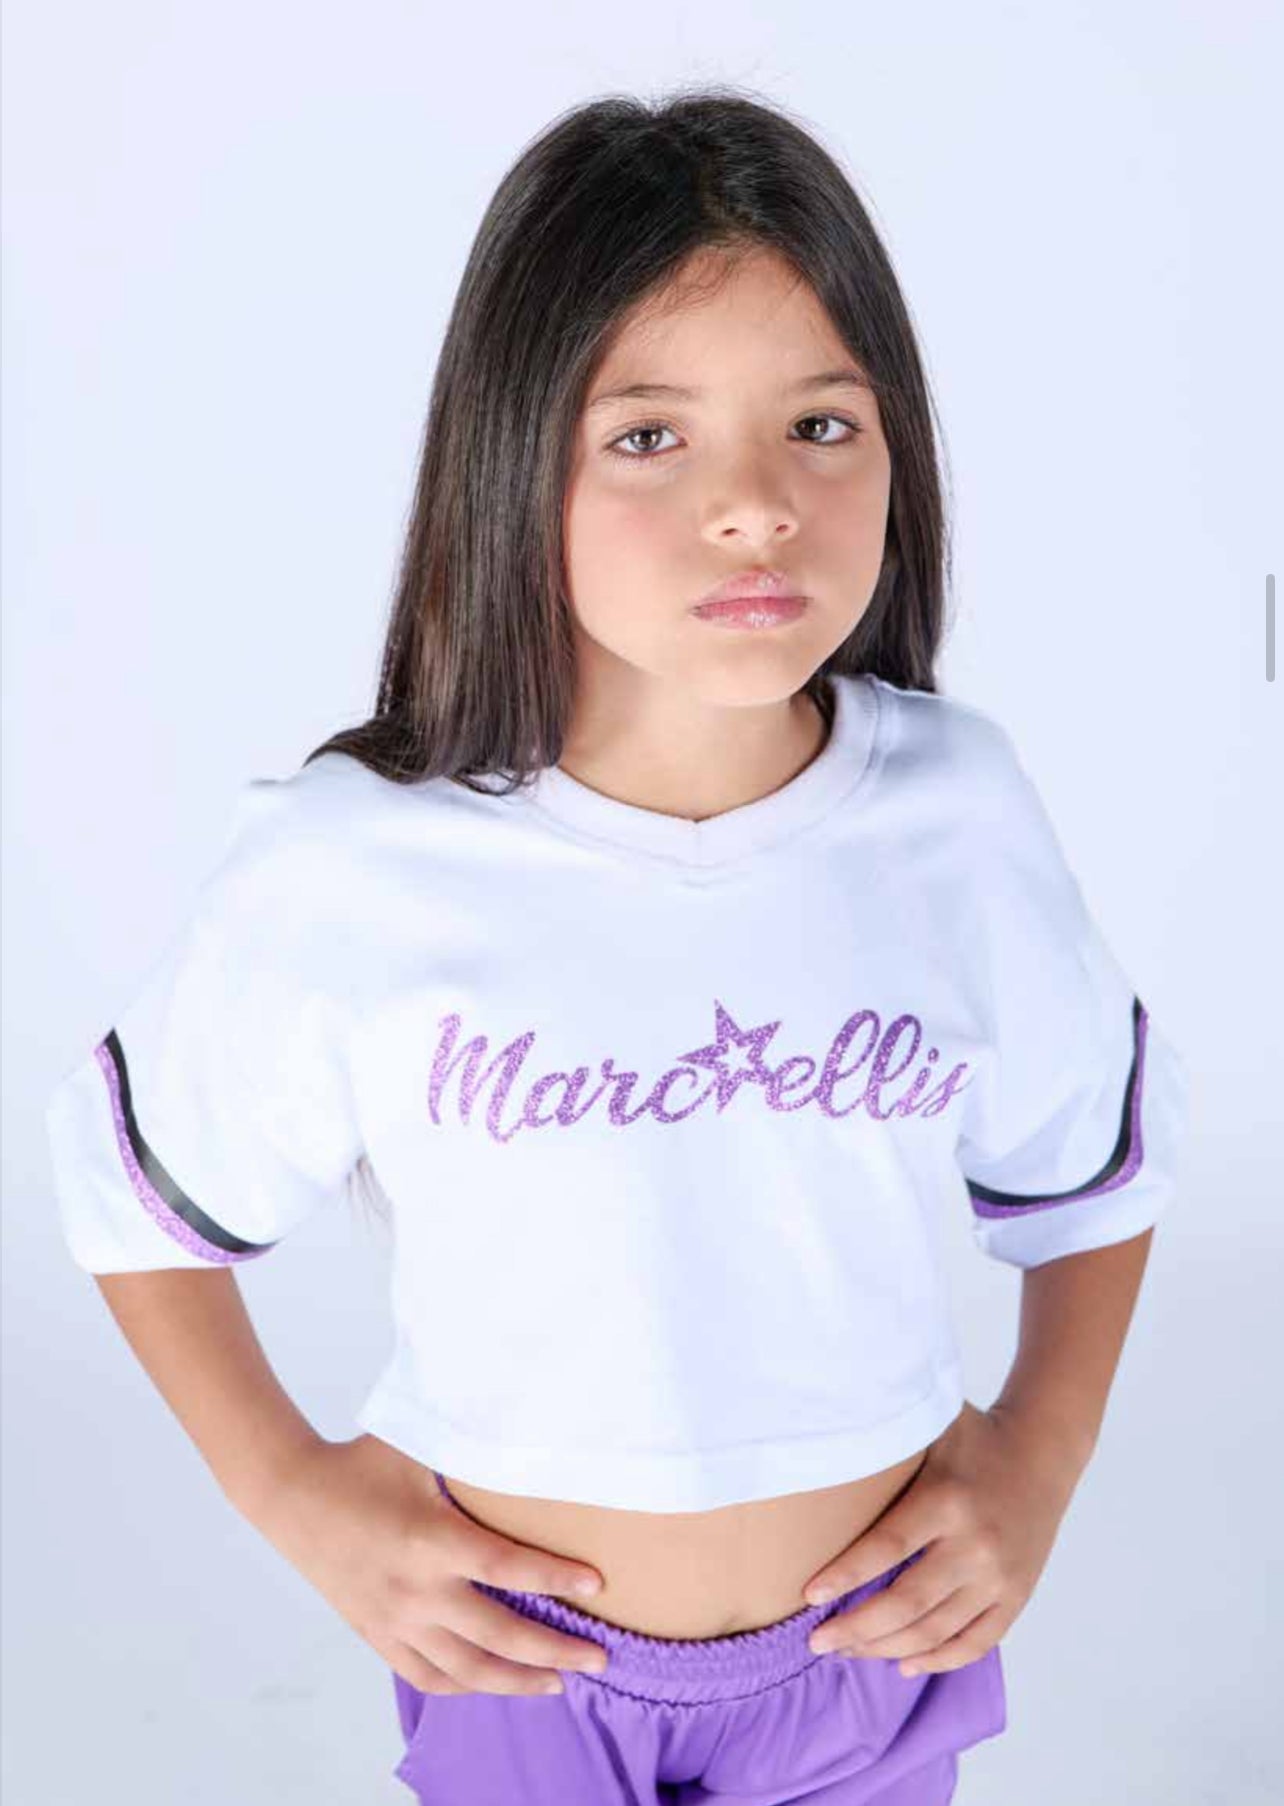 Marc Ellis Junior Girls White Shorts & T Shirt Set